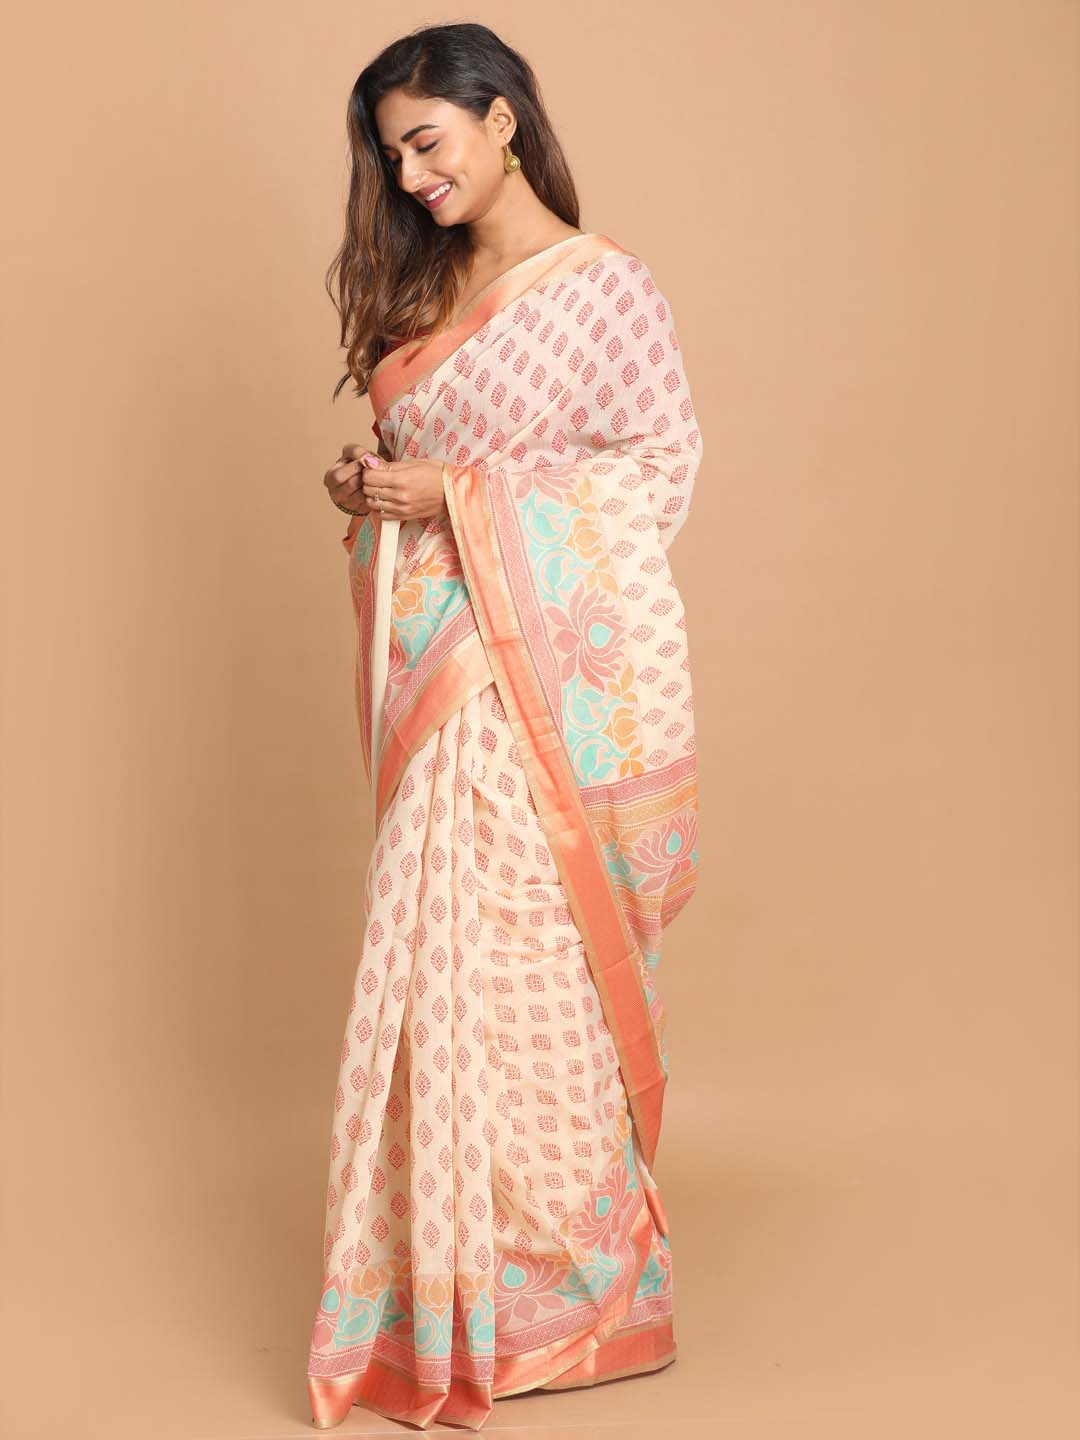 Indethnic Printed Cotton Blend Saree in Orange - View 1